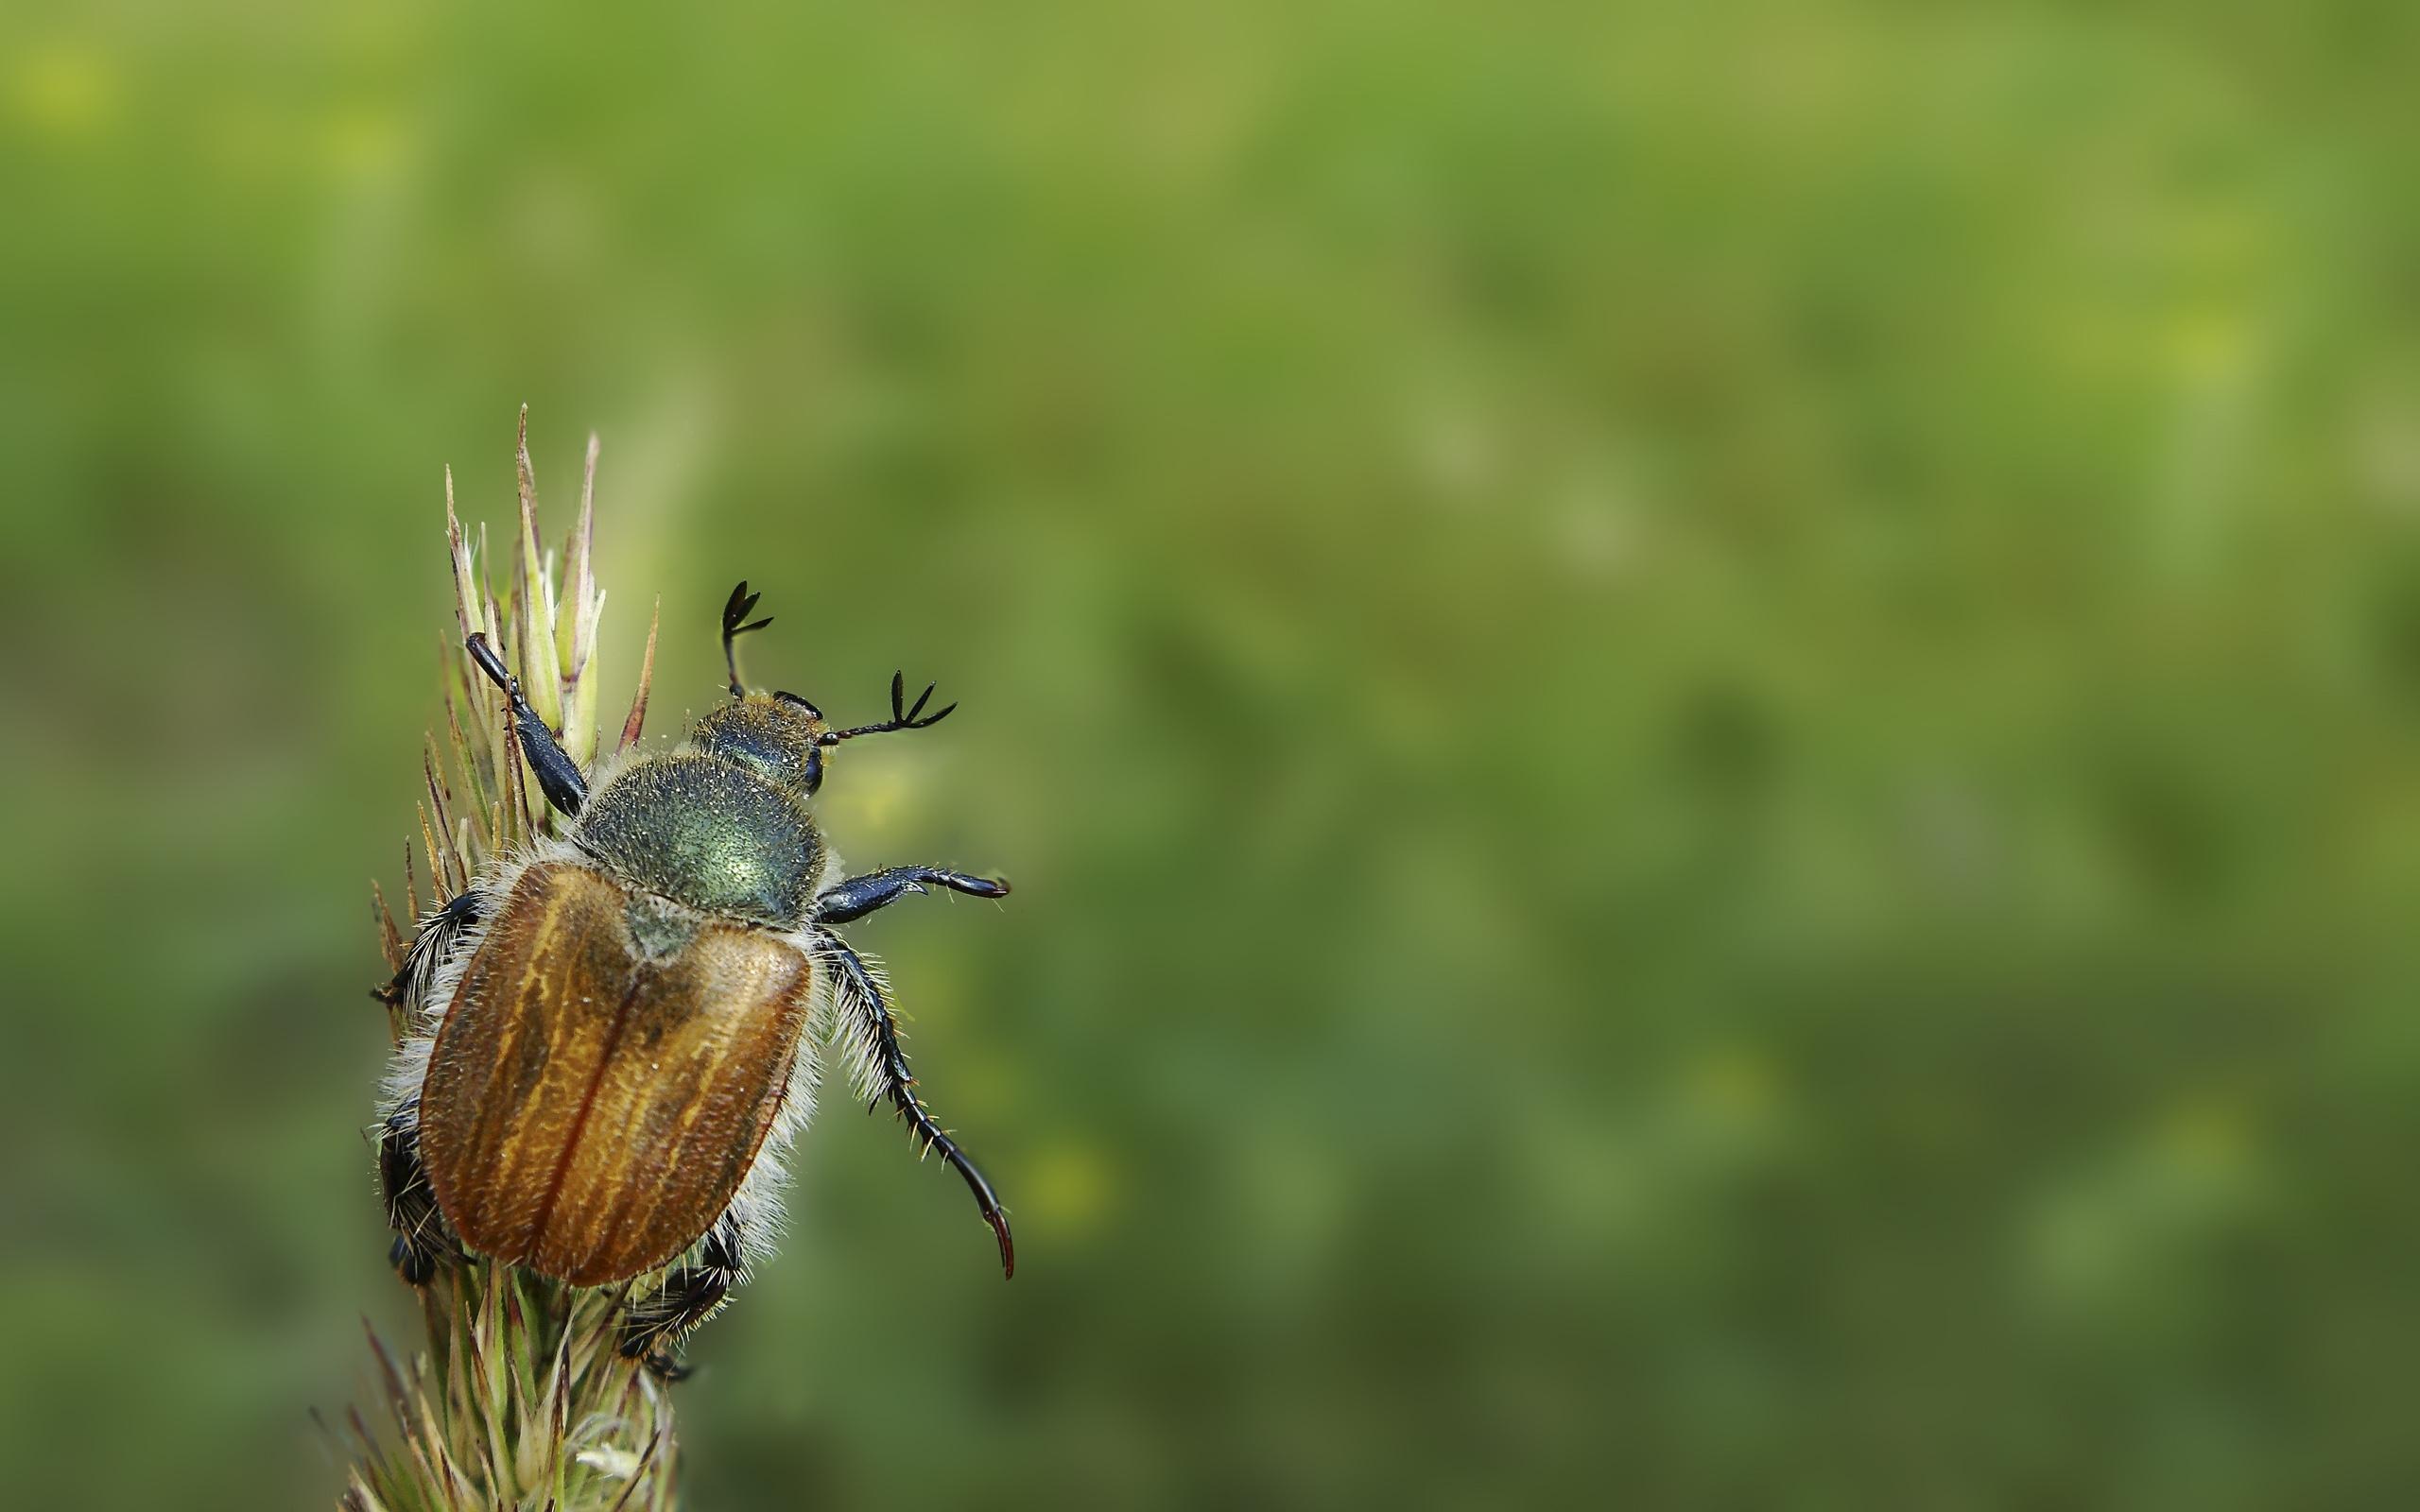 Beetle Background wallpaper